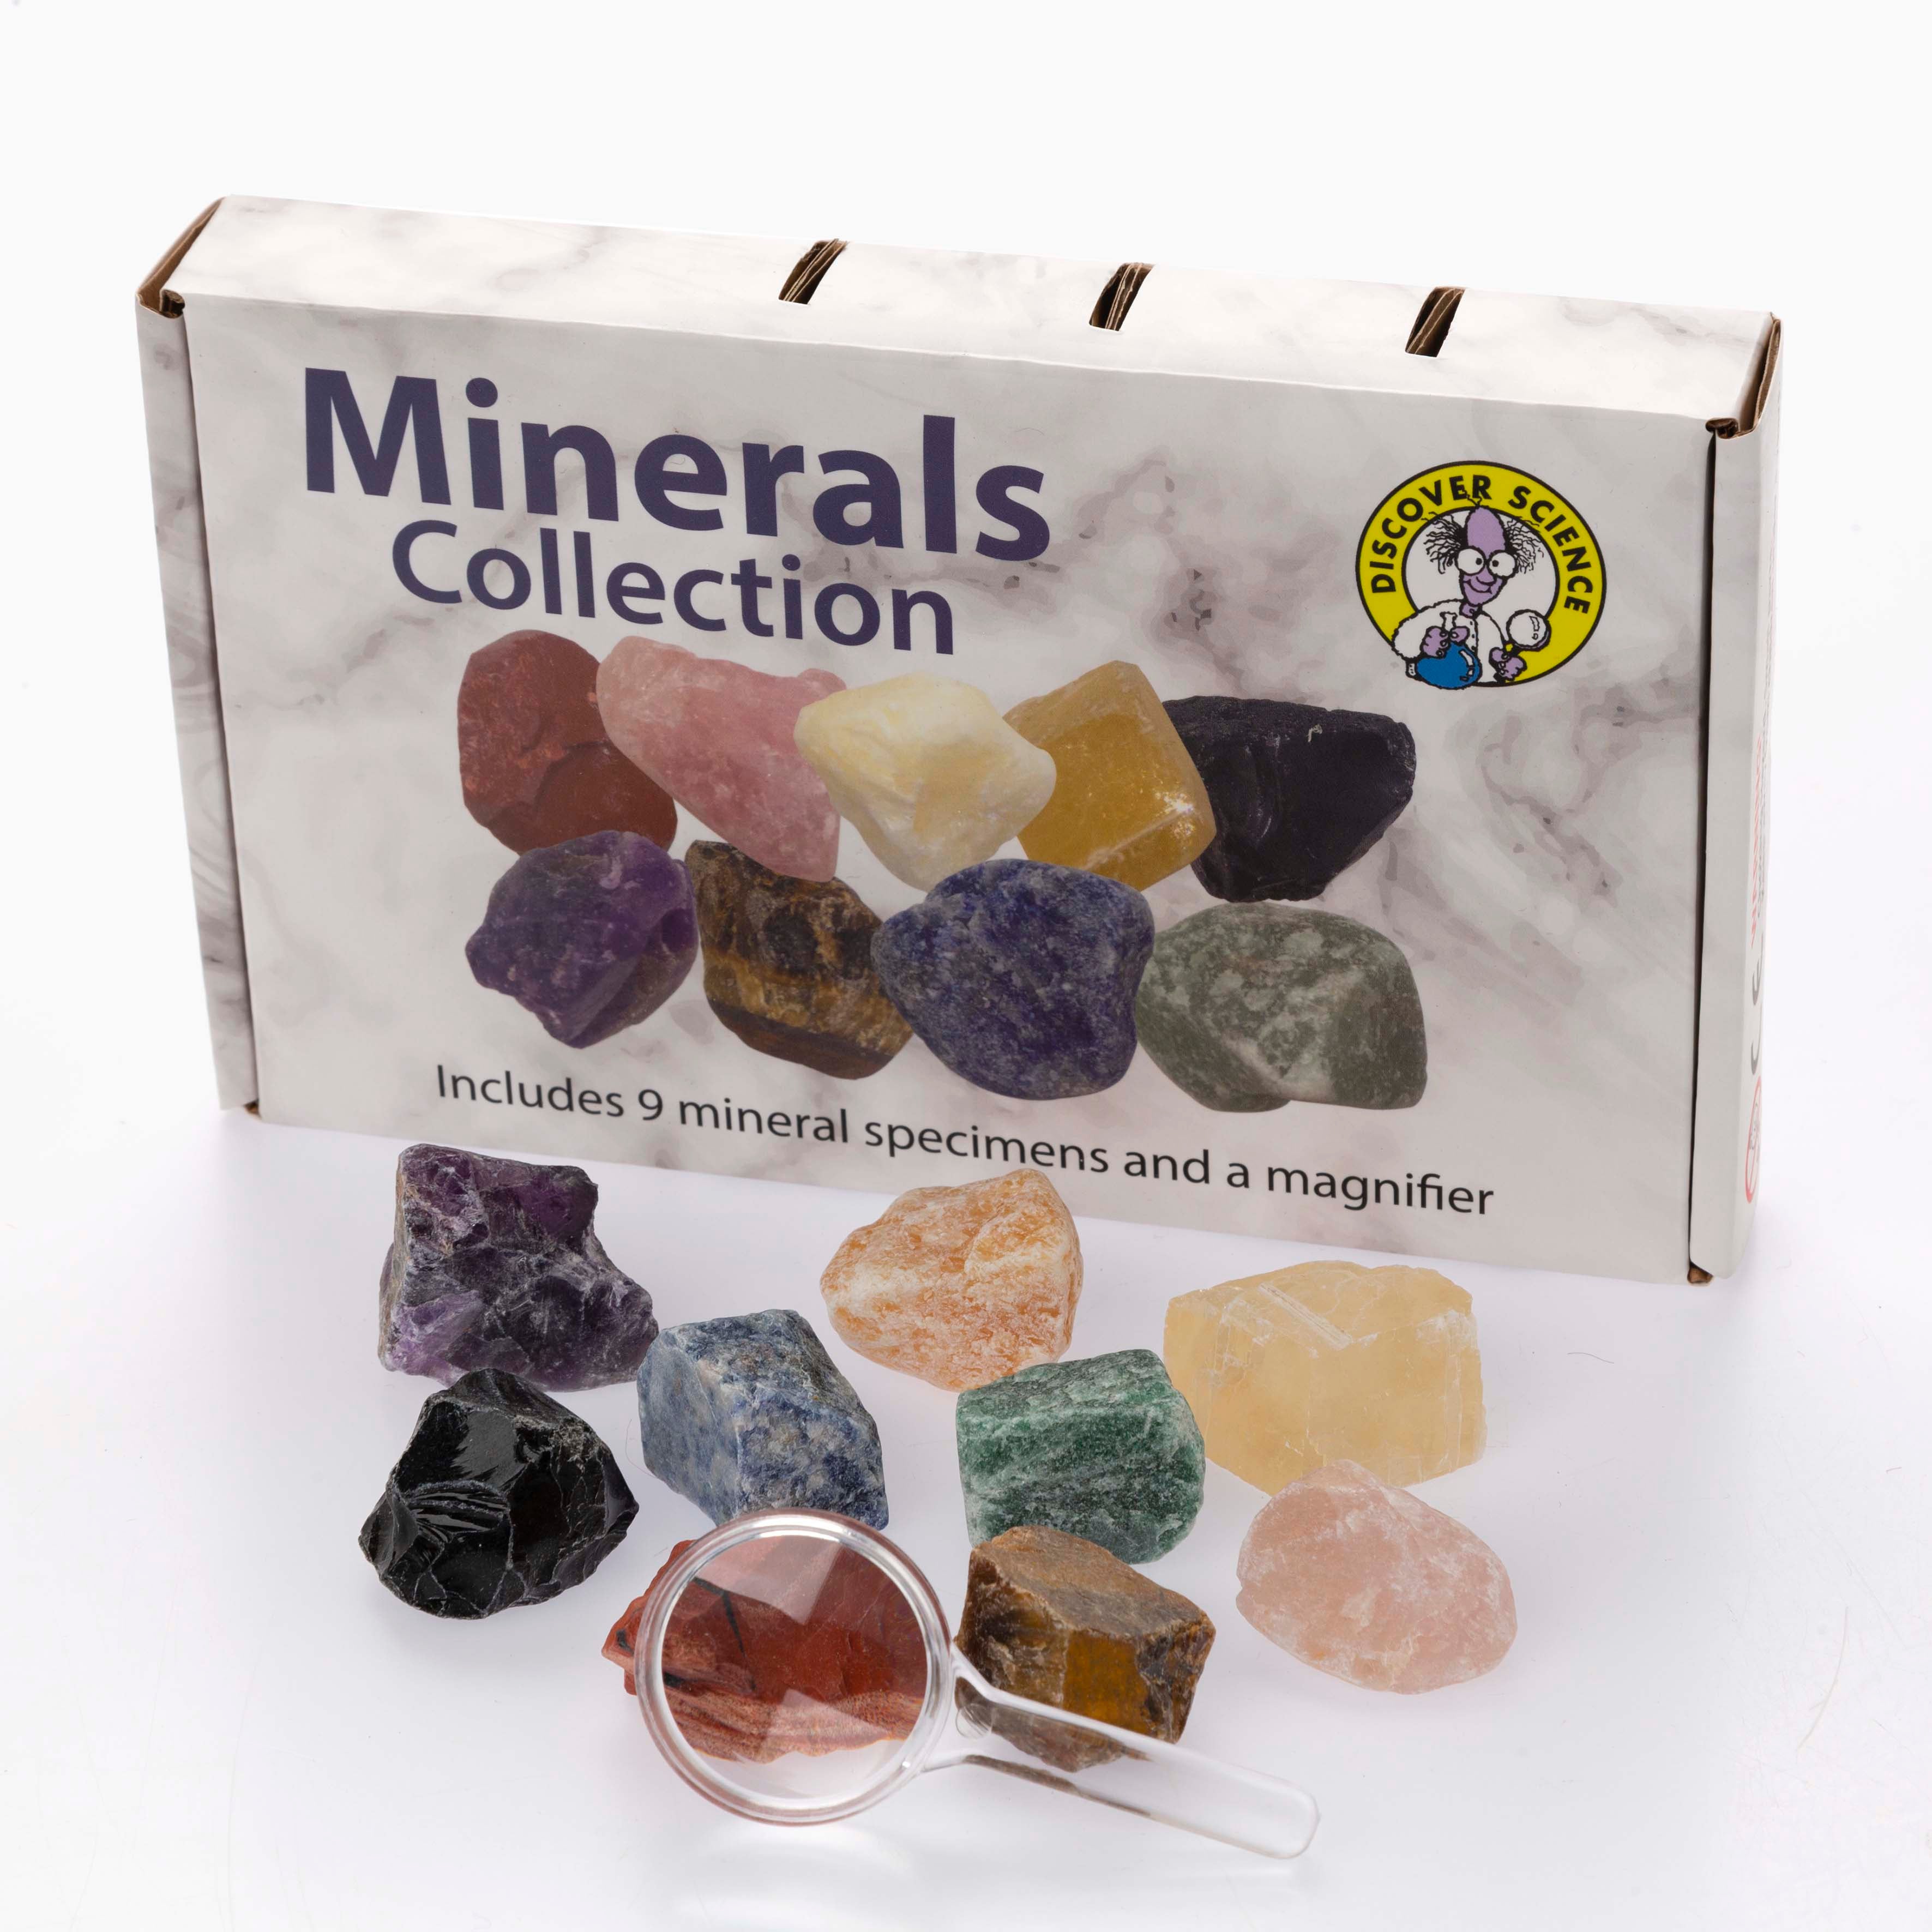 MineralsCollectionoutofboxfront.jpg